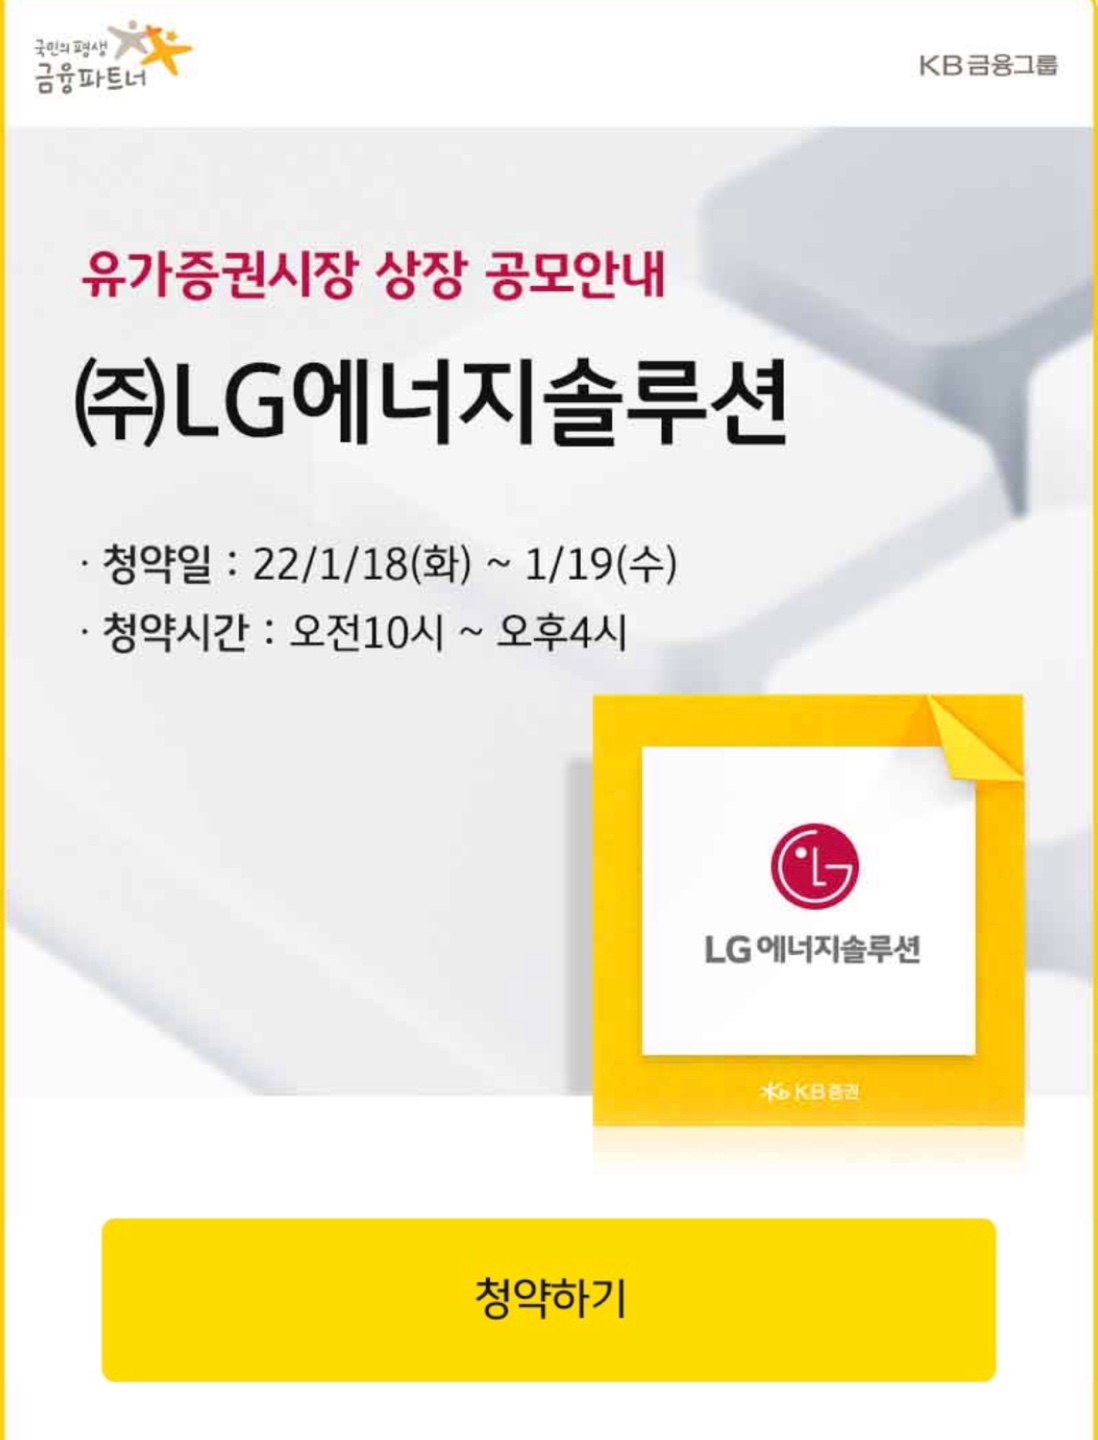 KB증권 LG에너지솔루션 청약진행